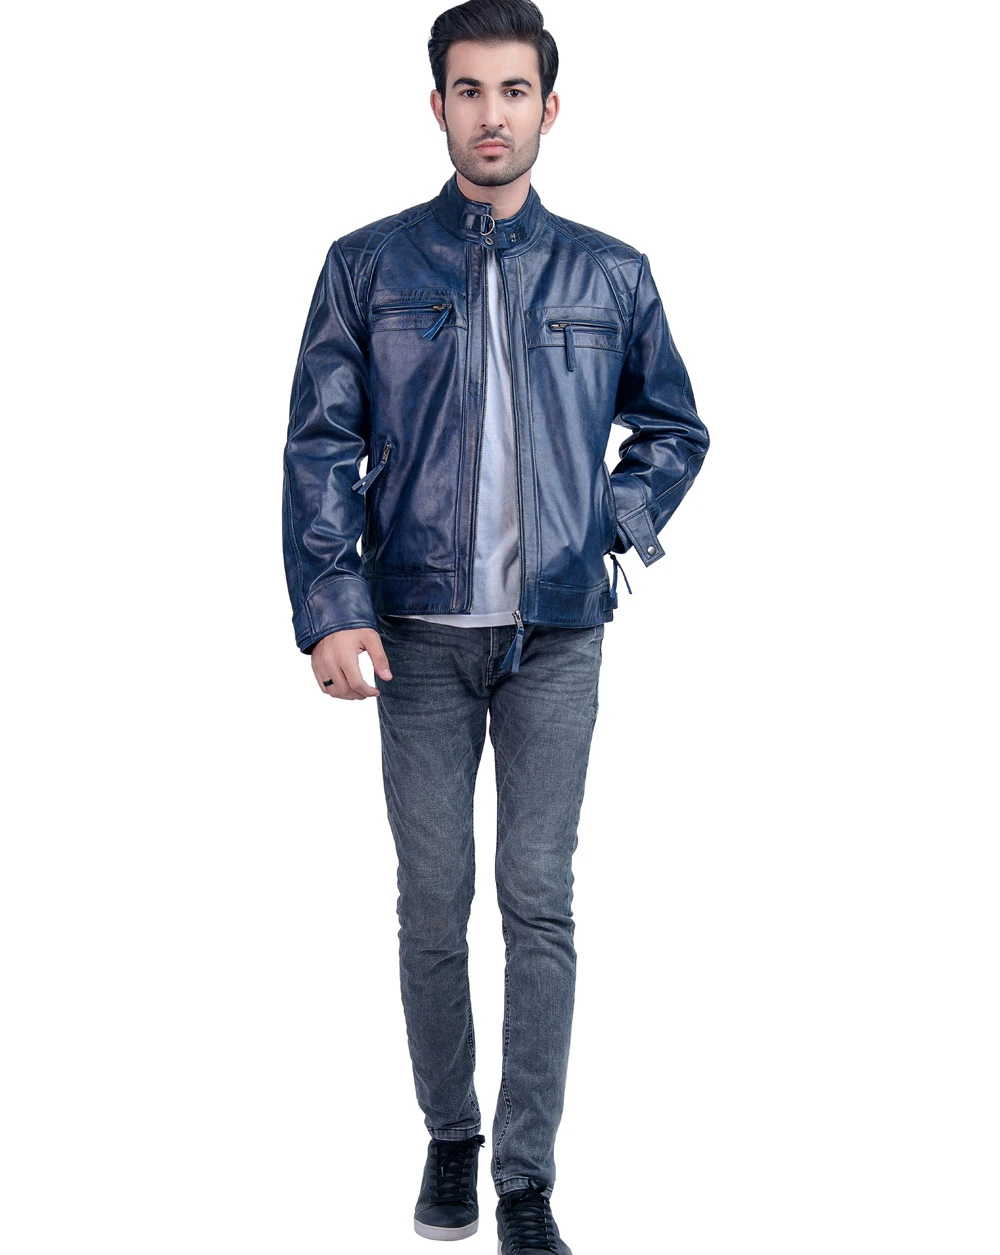 Buy Blue Biker Leather Jacket